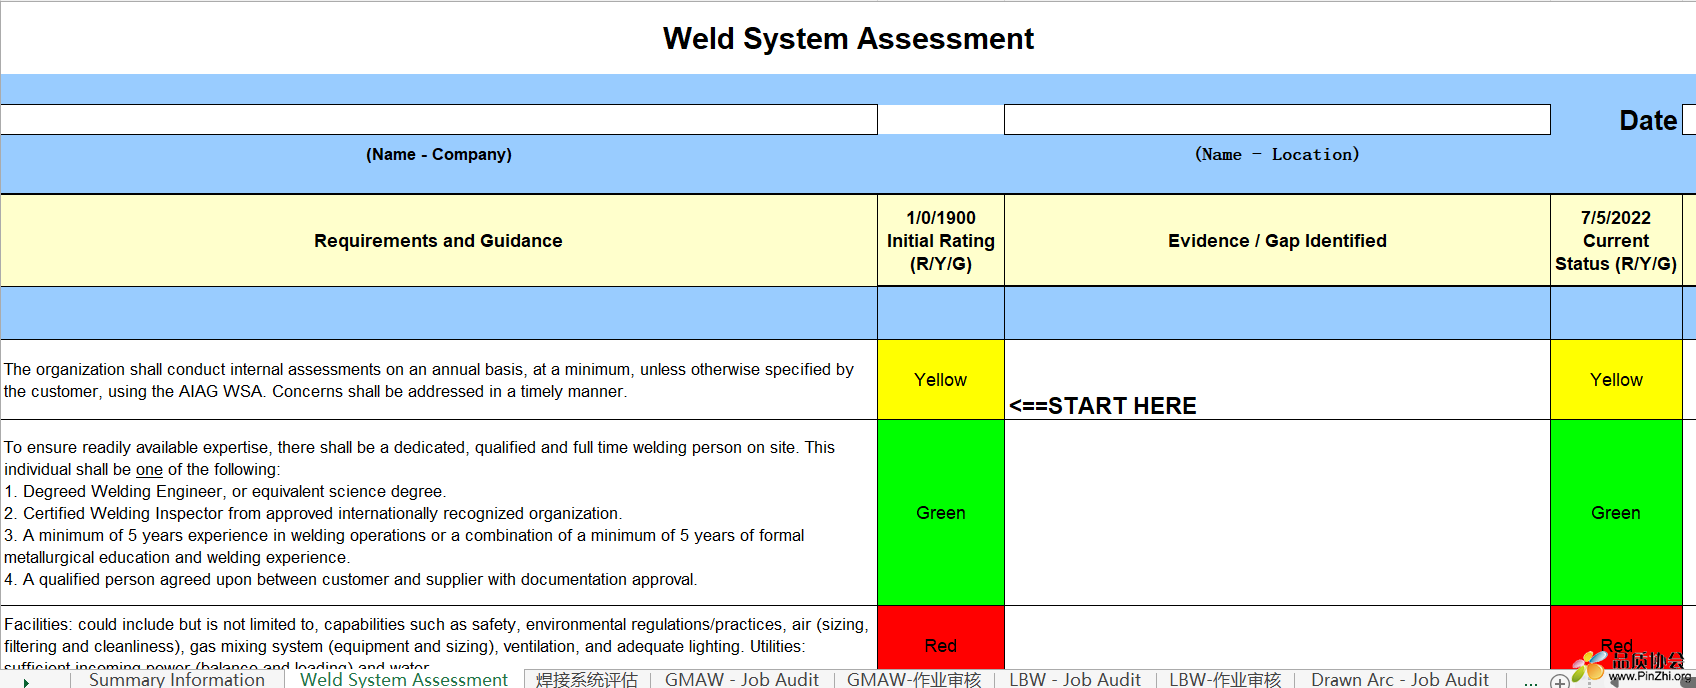 Weld System Assessment